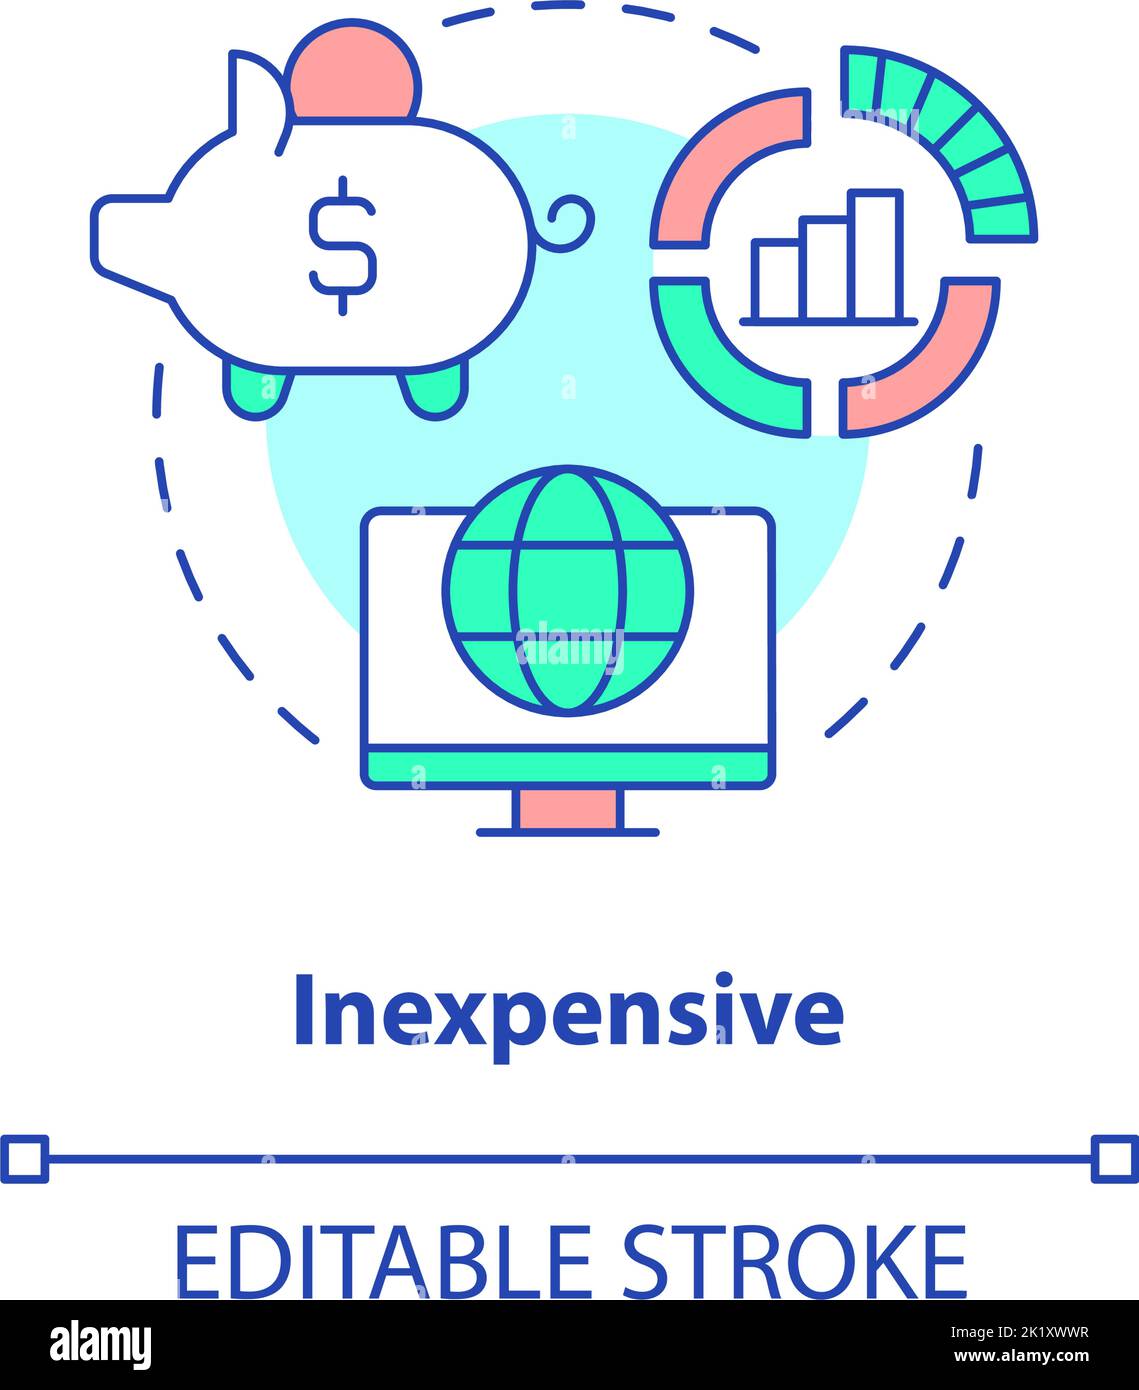 Inexpensive concept icon Stock Vector